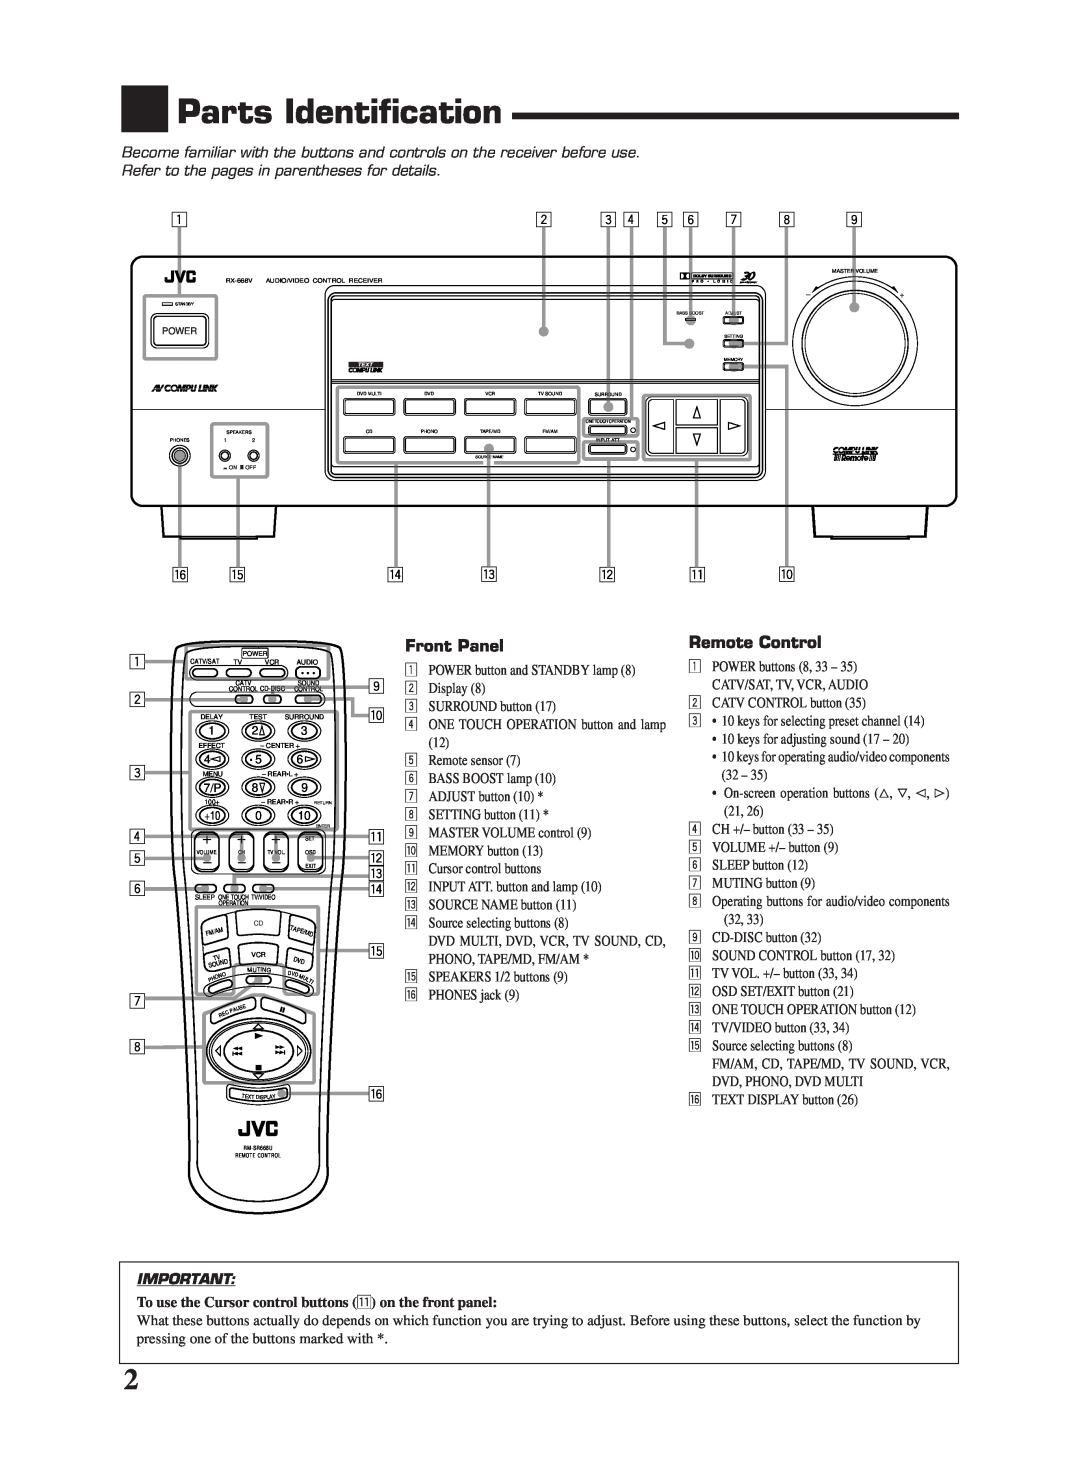 JVC RX-668VBK manual Parts Identification, Front Panel, Remote Control 